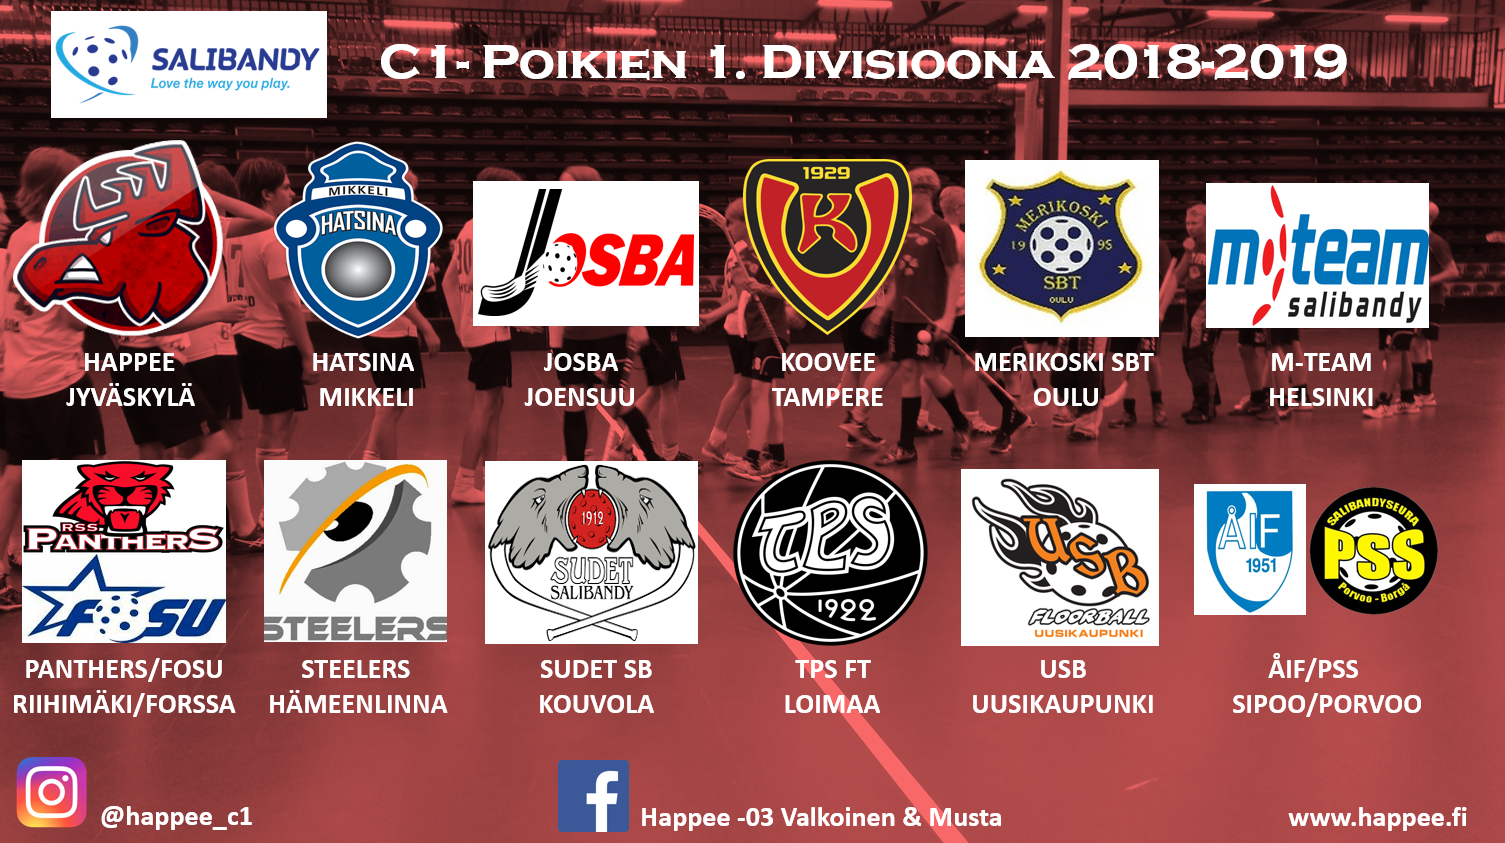 C1- Poikien 1. Divisioona kaudella 2018-2019